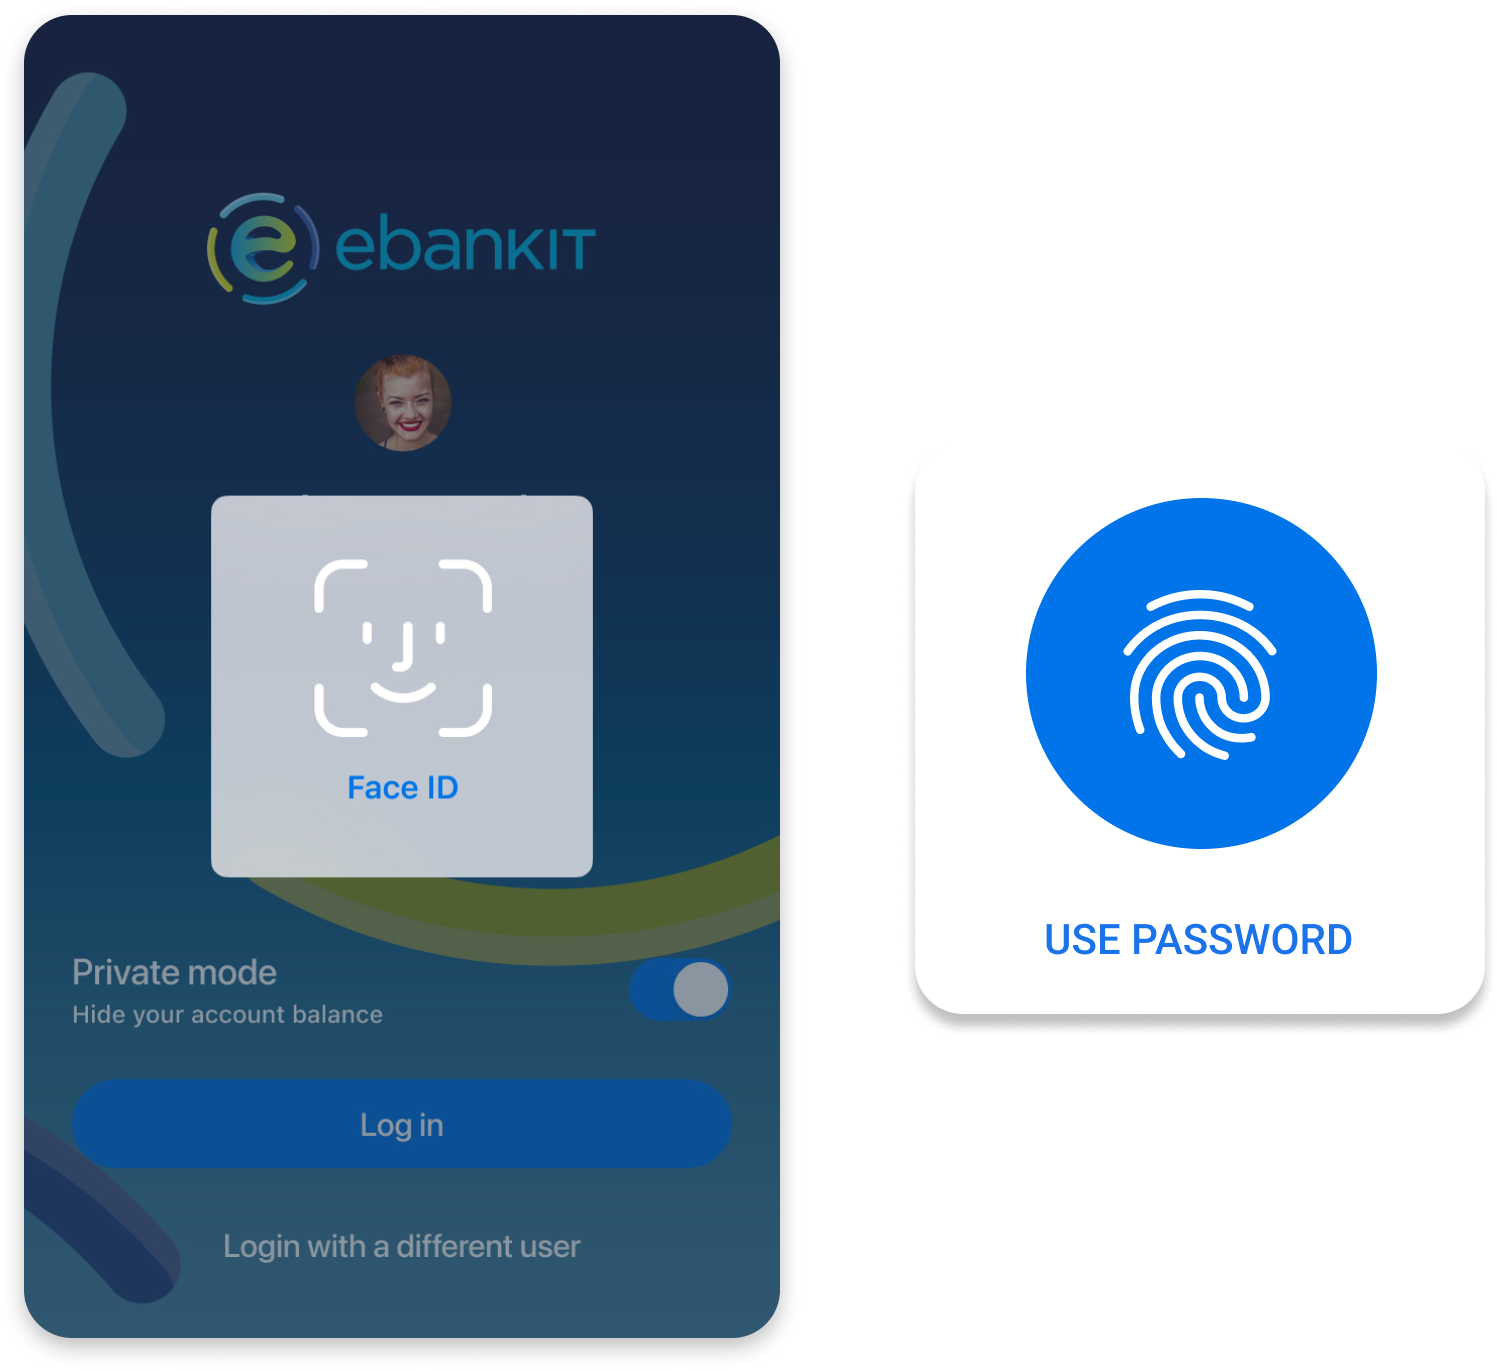 ebankit mobile biometric authentication